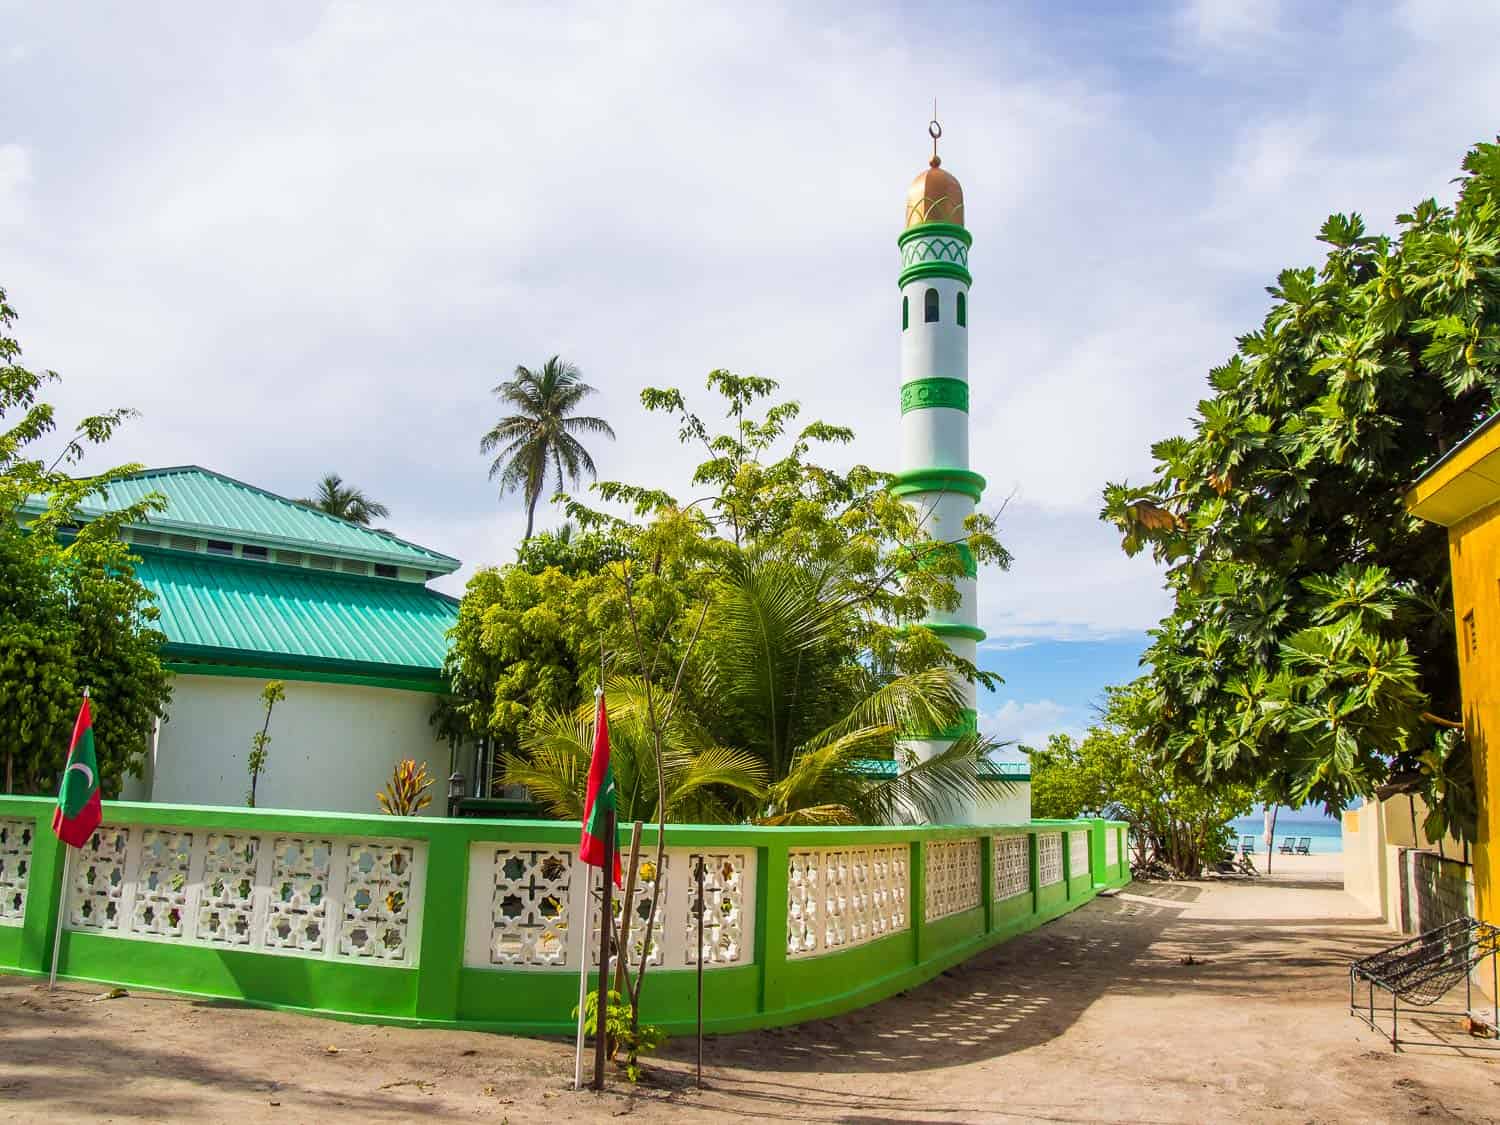 Fulidhoo's mosque